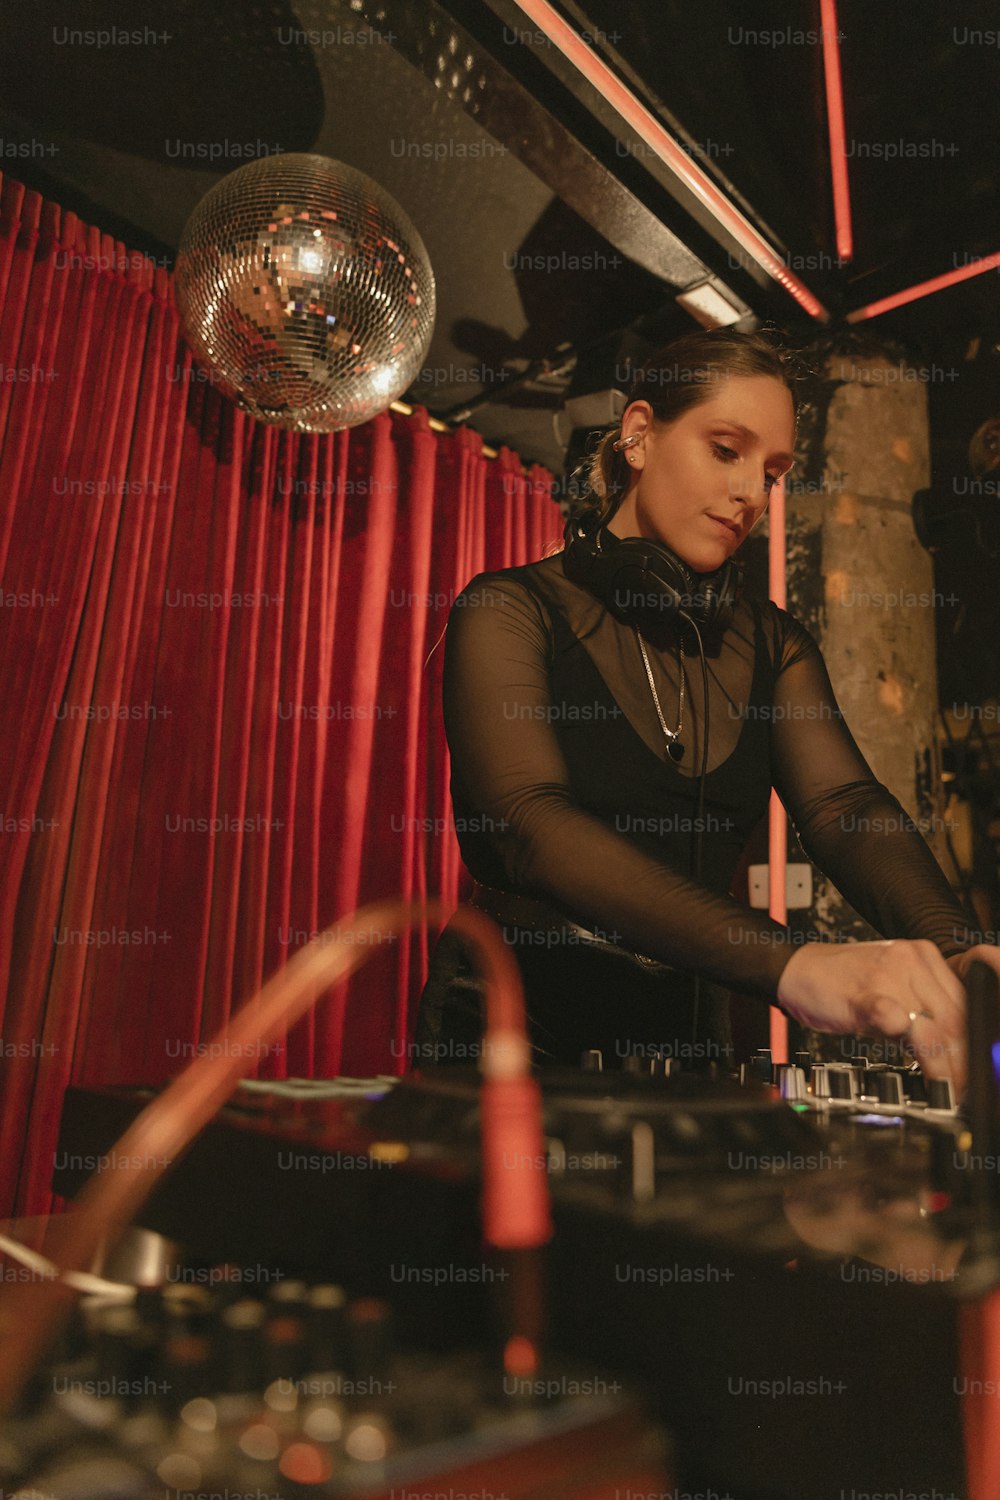 a woman in a black dress playing a dj set